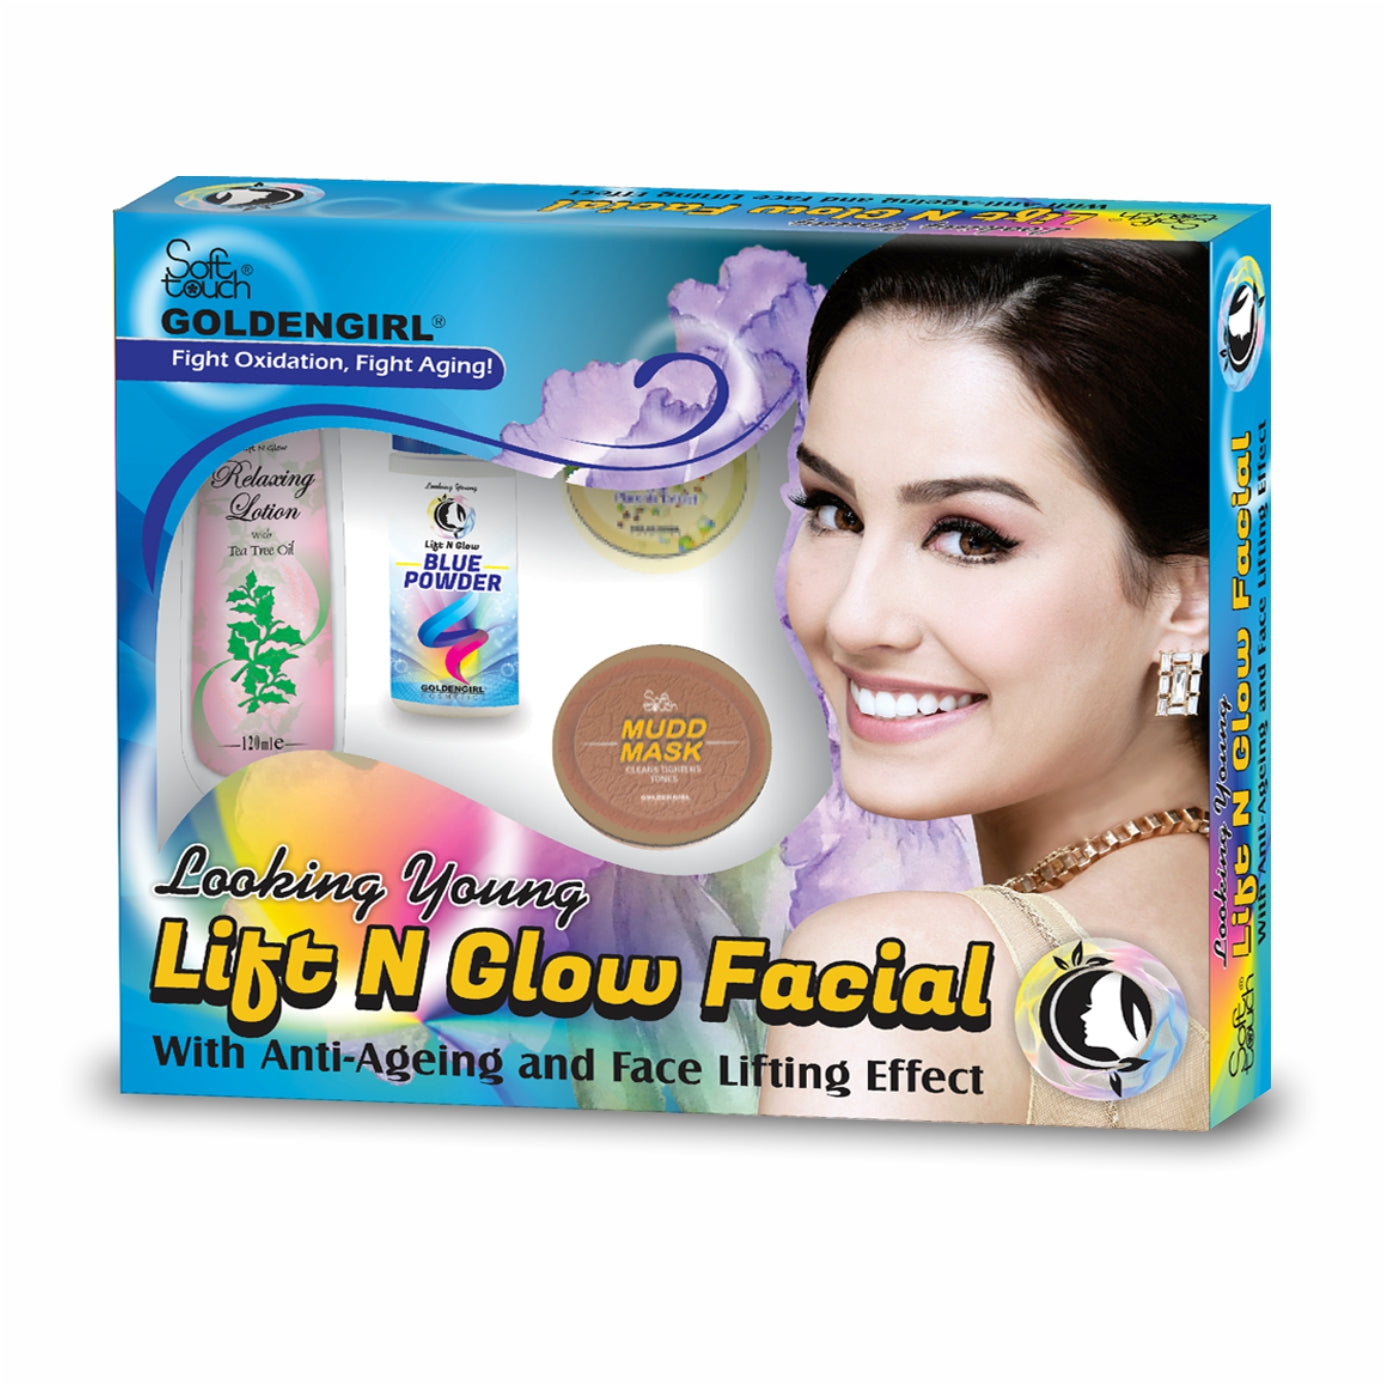 Lift n Glow Facial Set 9 items - Golden Girl Cosmetics